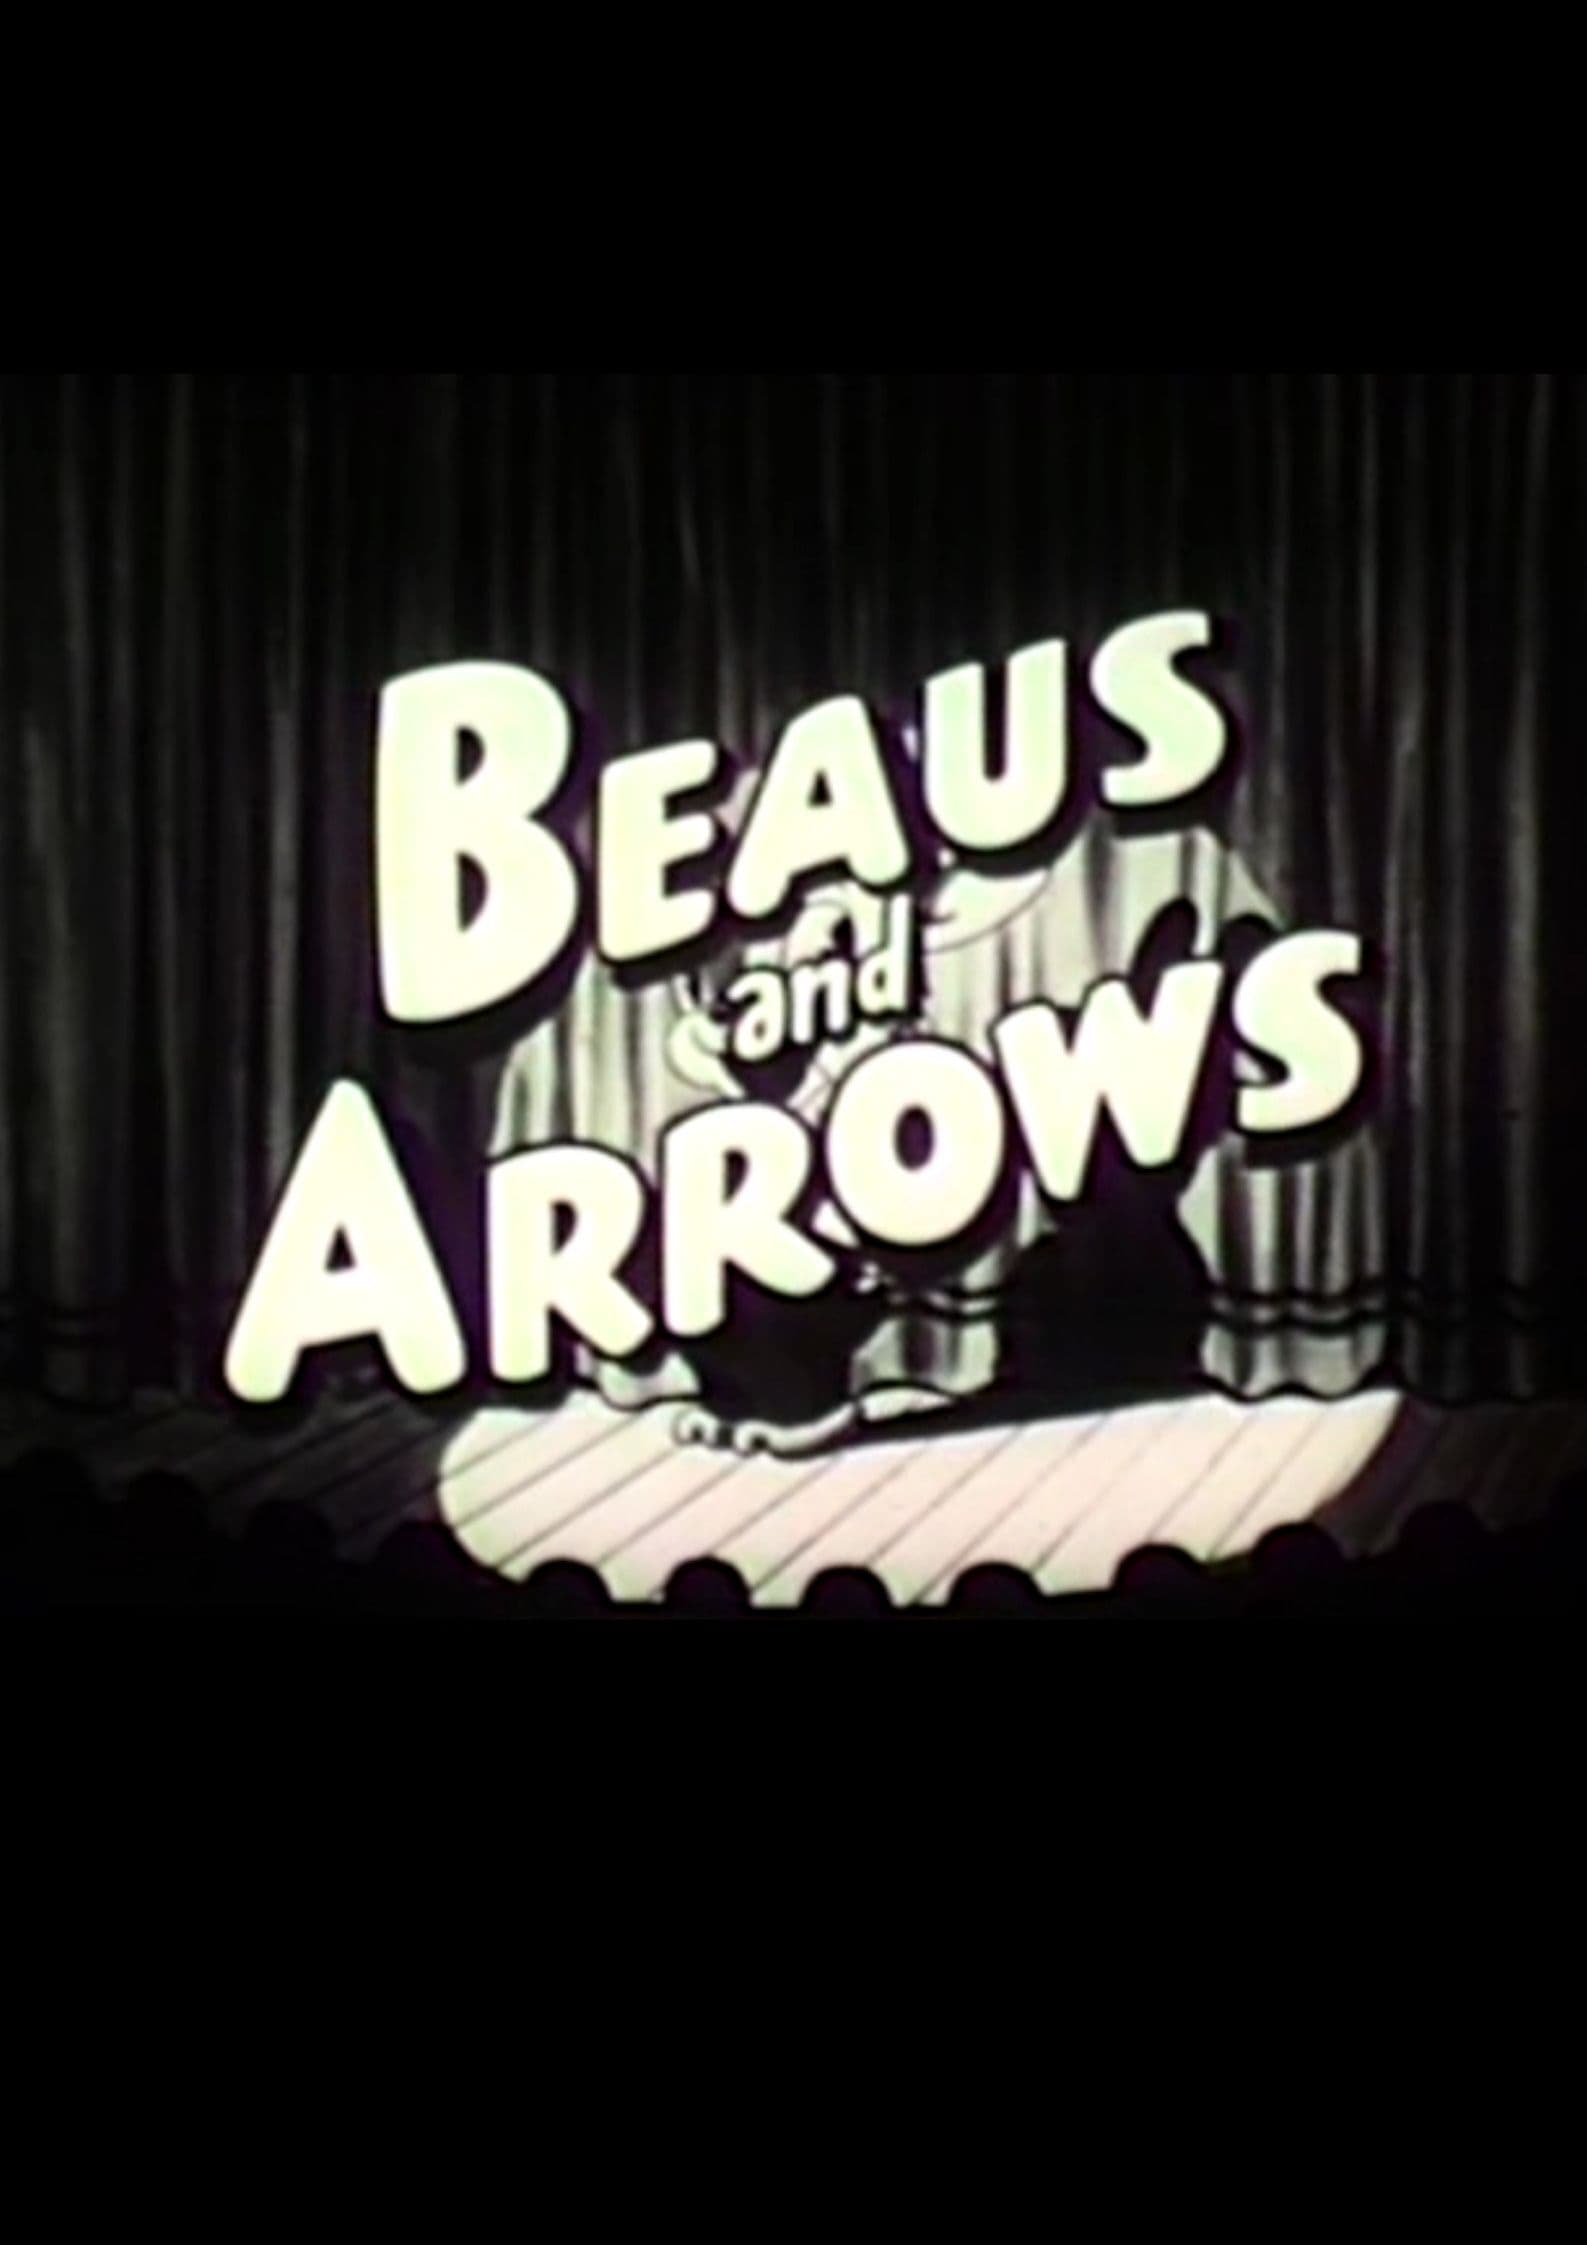 Beau and Arrows (1932)